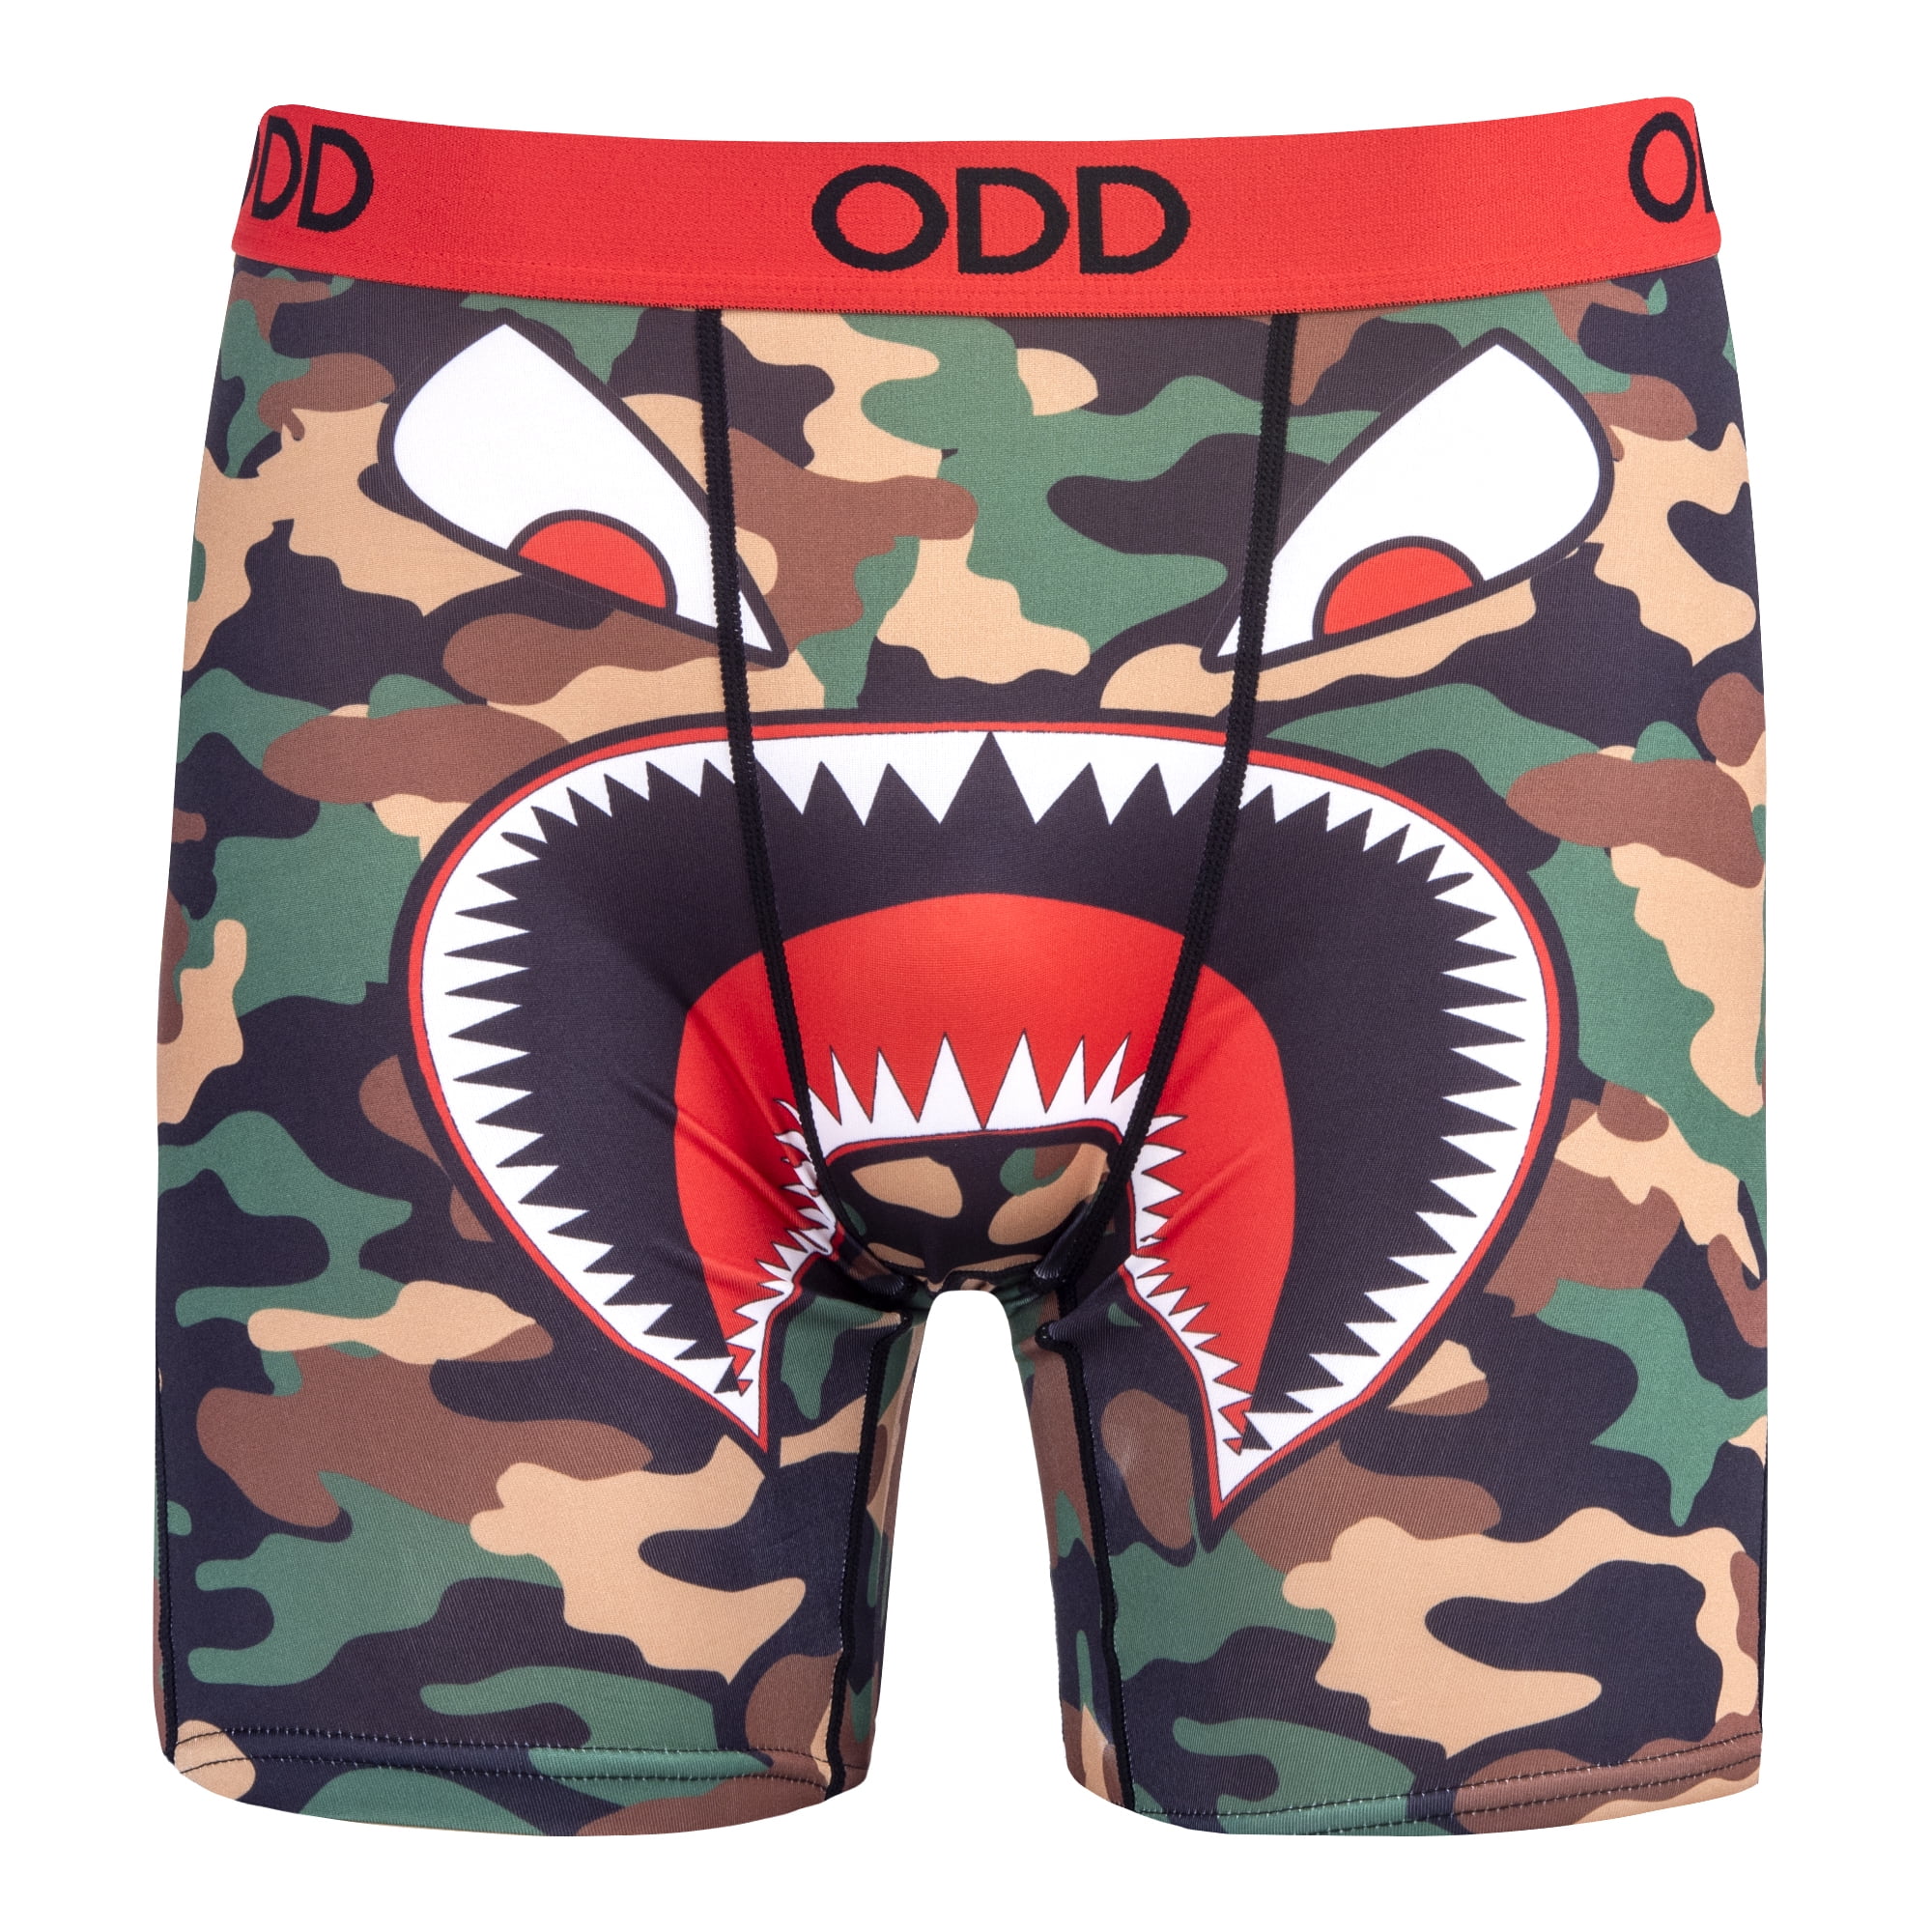 Odd Sox, War Plane, Men's Boxer Briefs, Funny Novelty Underwear